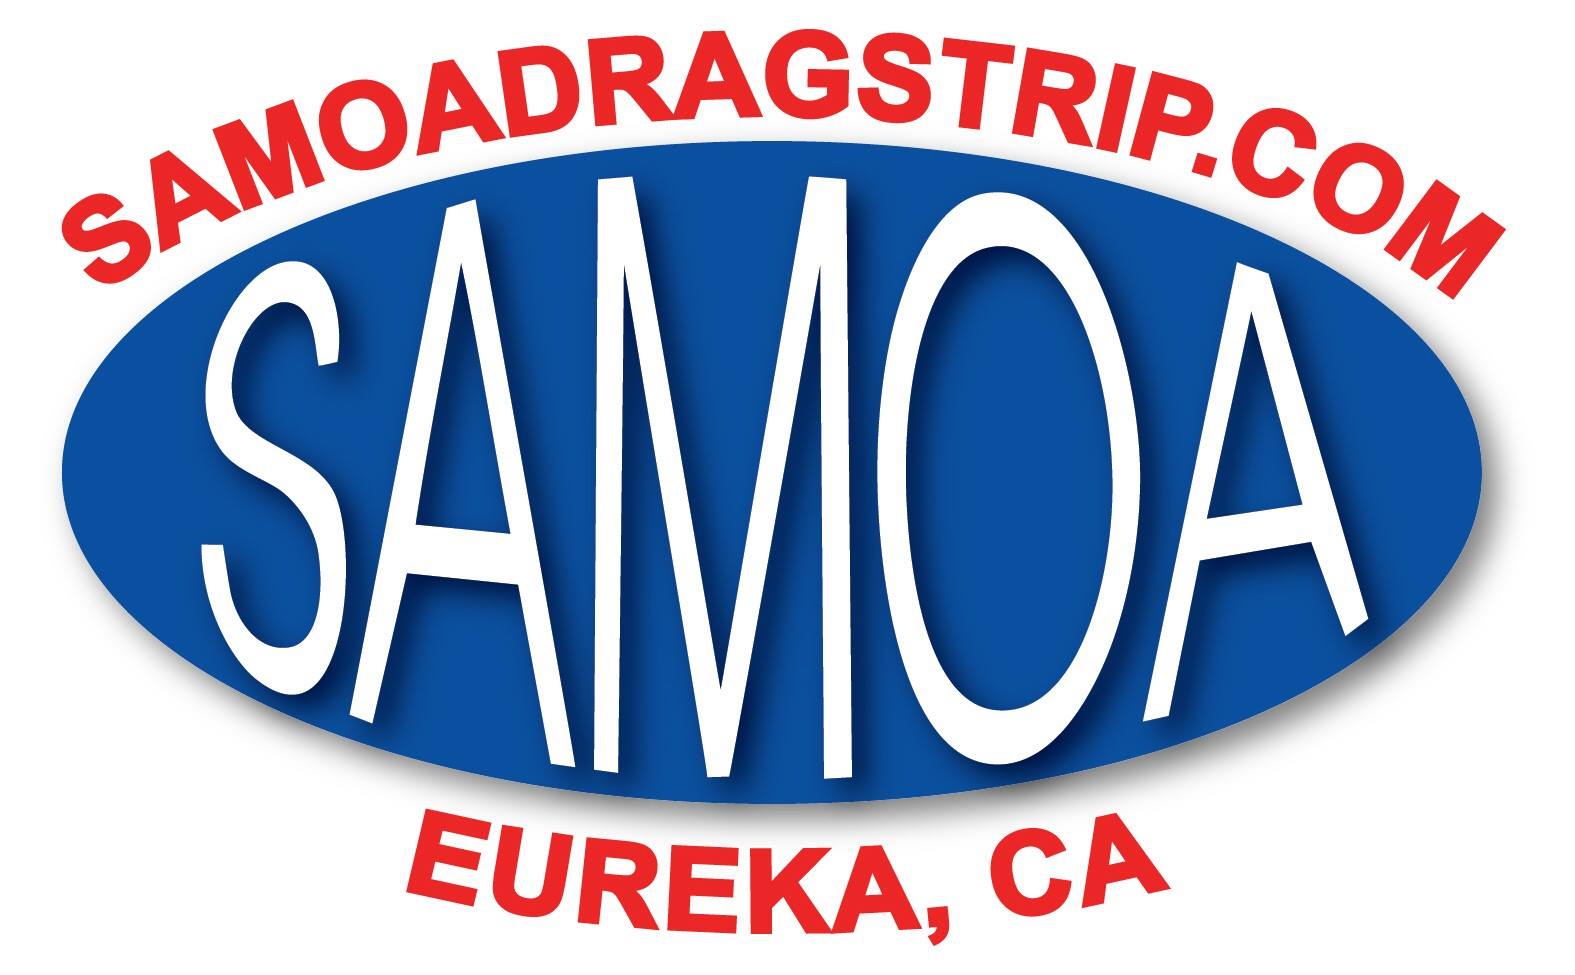 Samoa Dragstrip fb logo